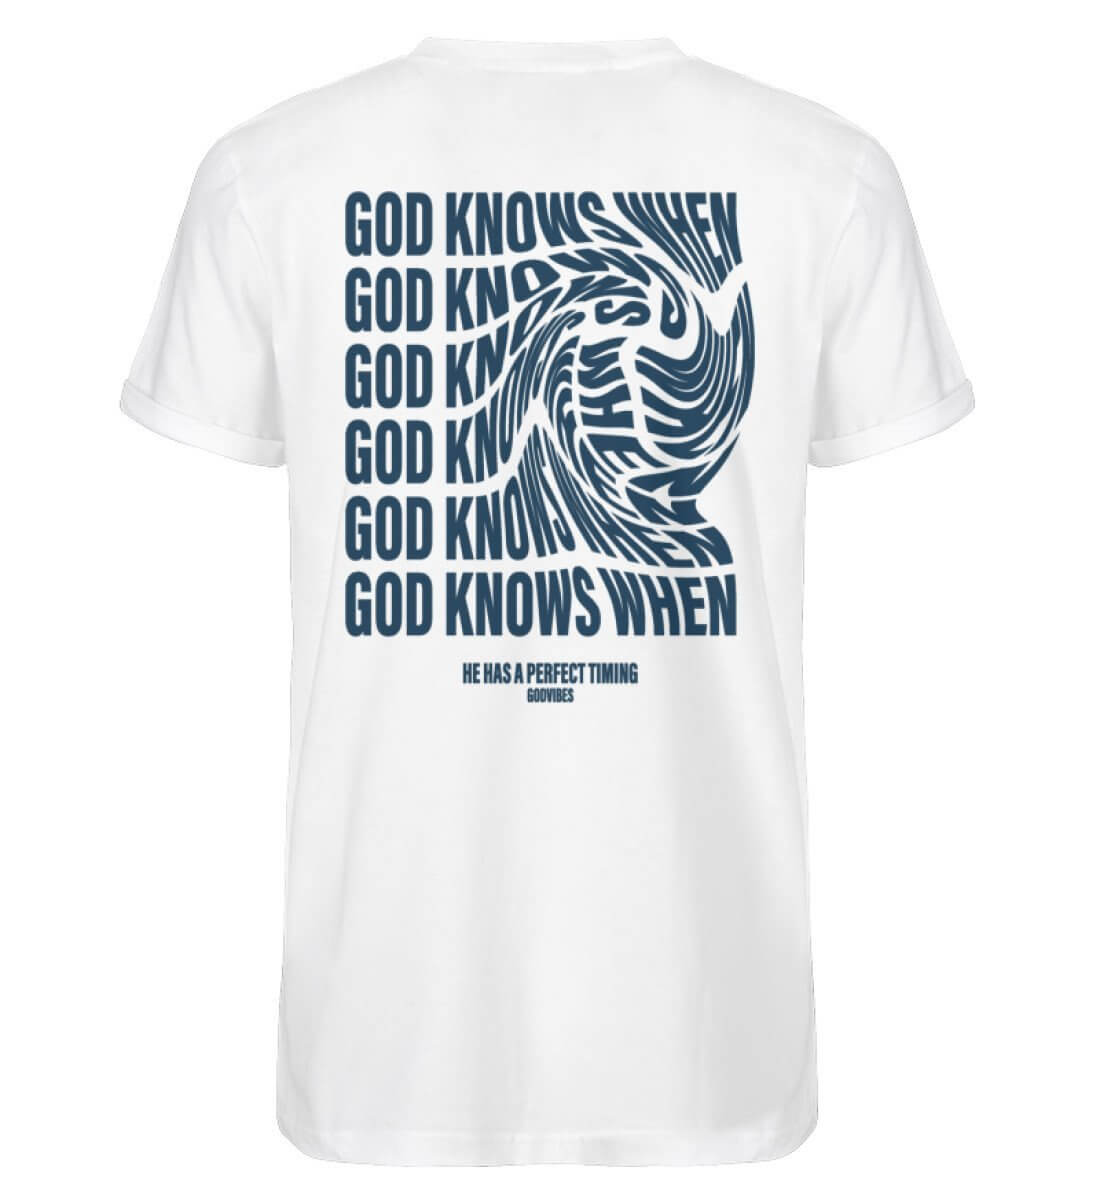 GOD KNOWS WHEN | - Herren RollUp Shirt - GODVIBES